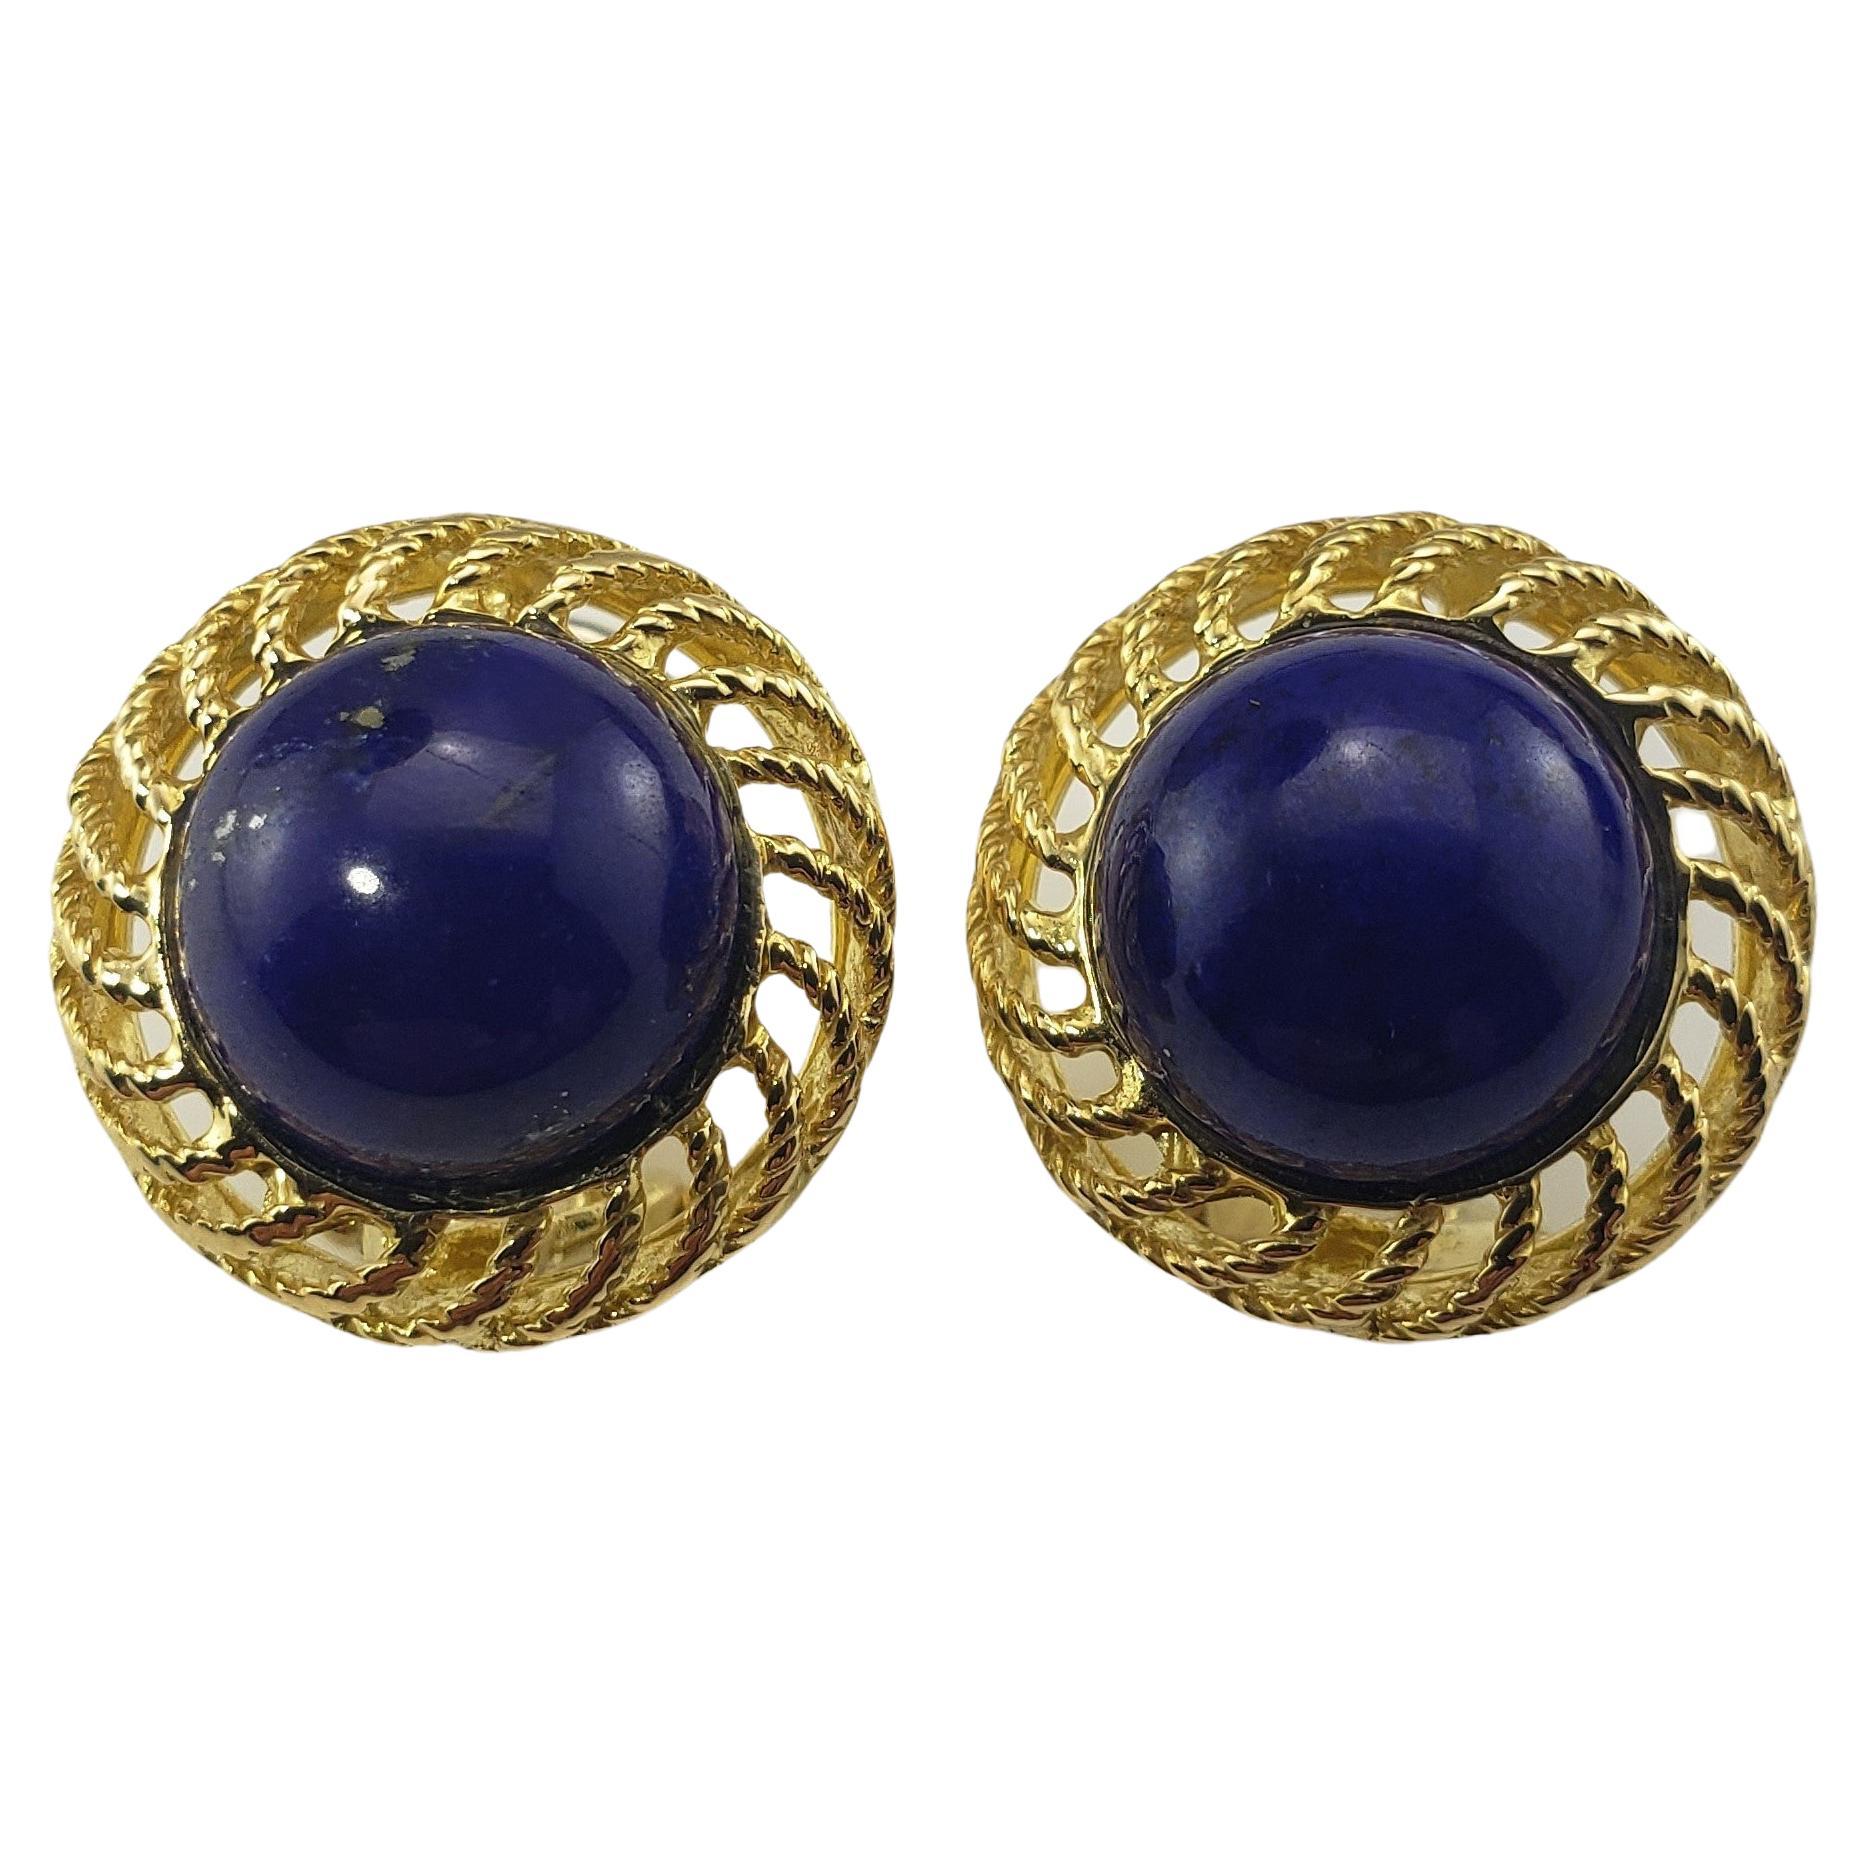 Center drill Lapis Lazuli Earrings 8g-C495 Vintage Carved Lapis Lazuli Round Earrings Pair 14mm